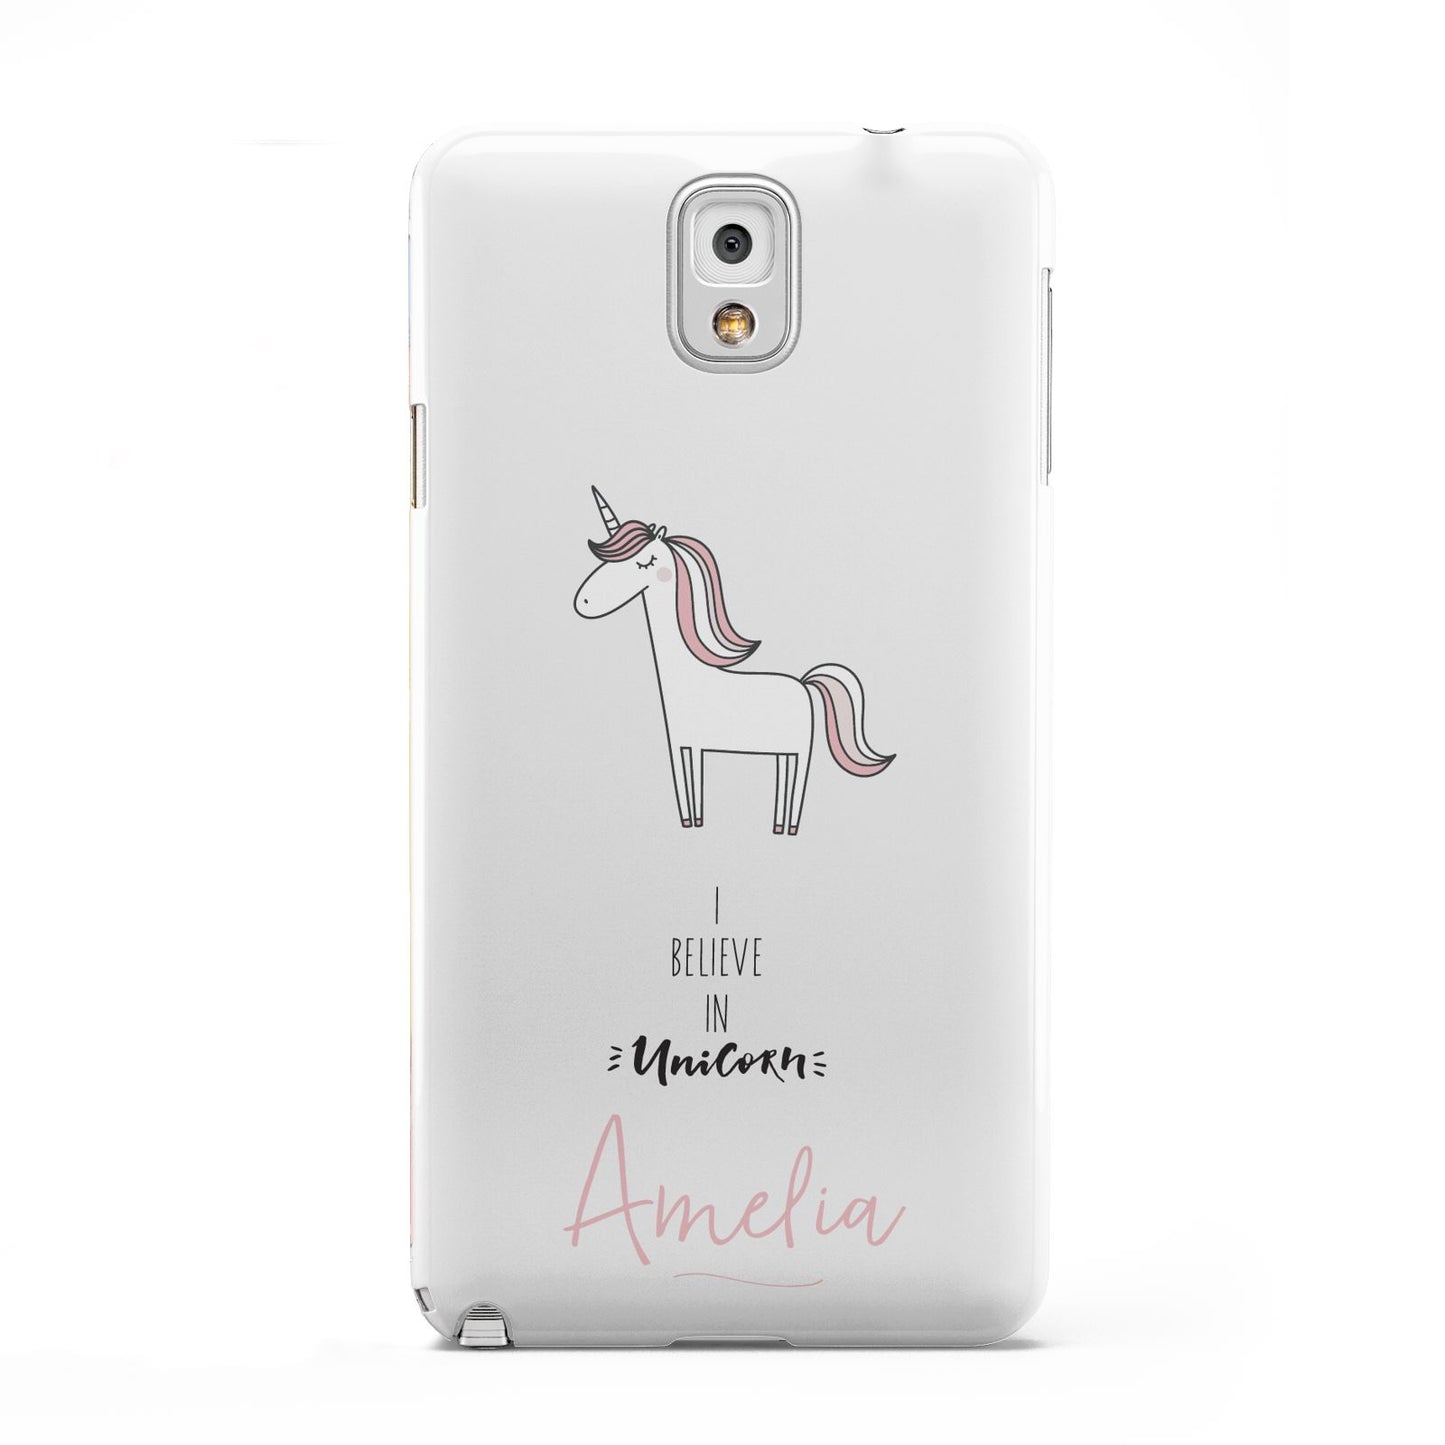 I Believe in Unicorn Samsung Galaxy Note 3 Case